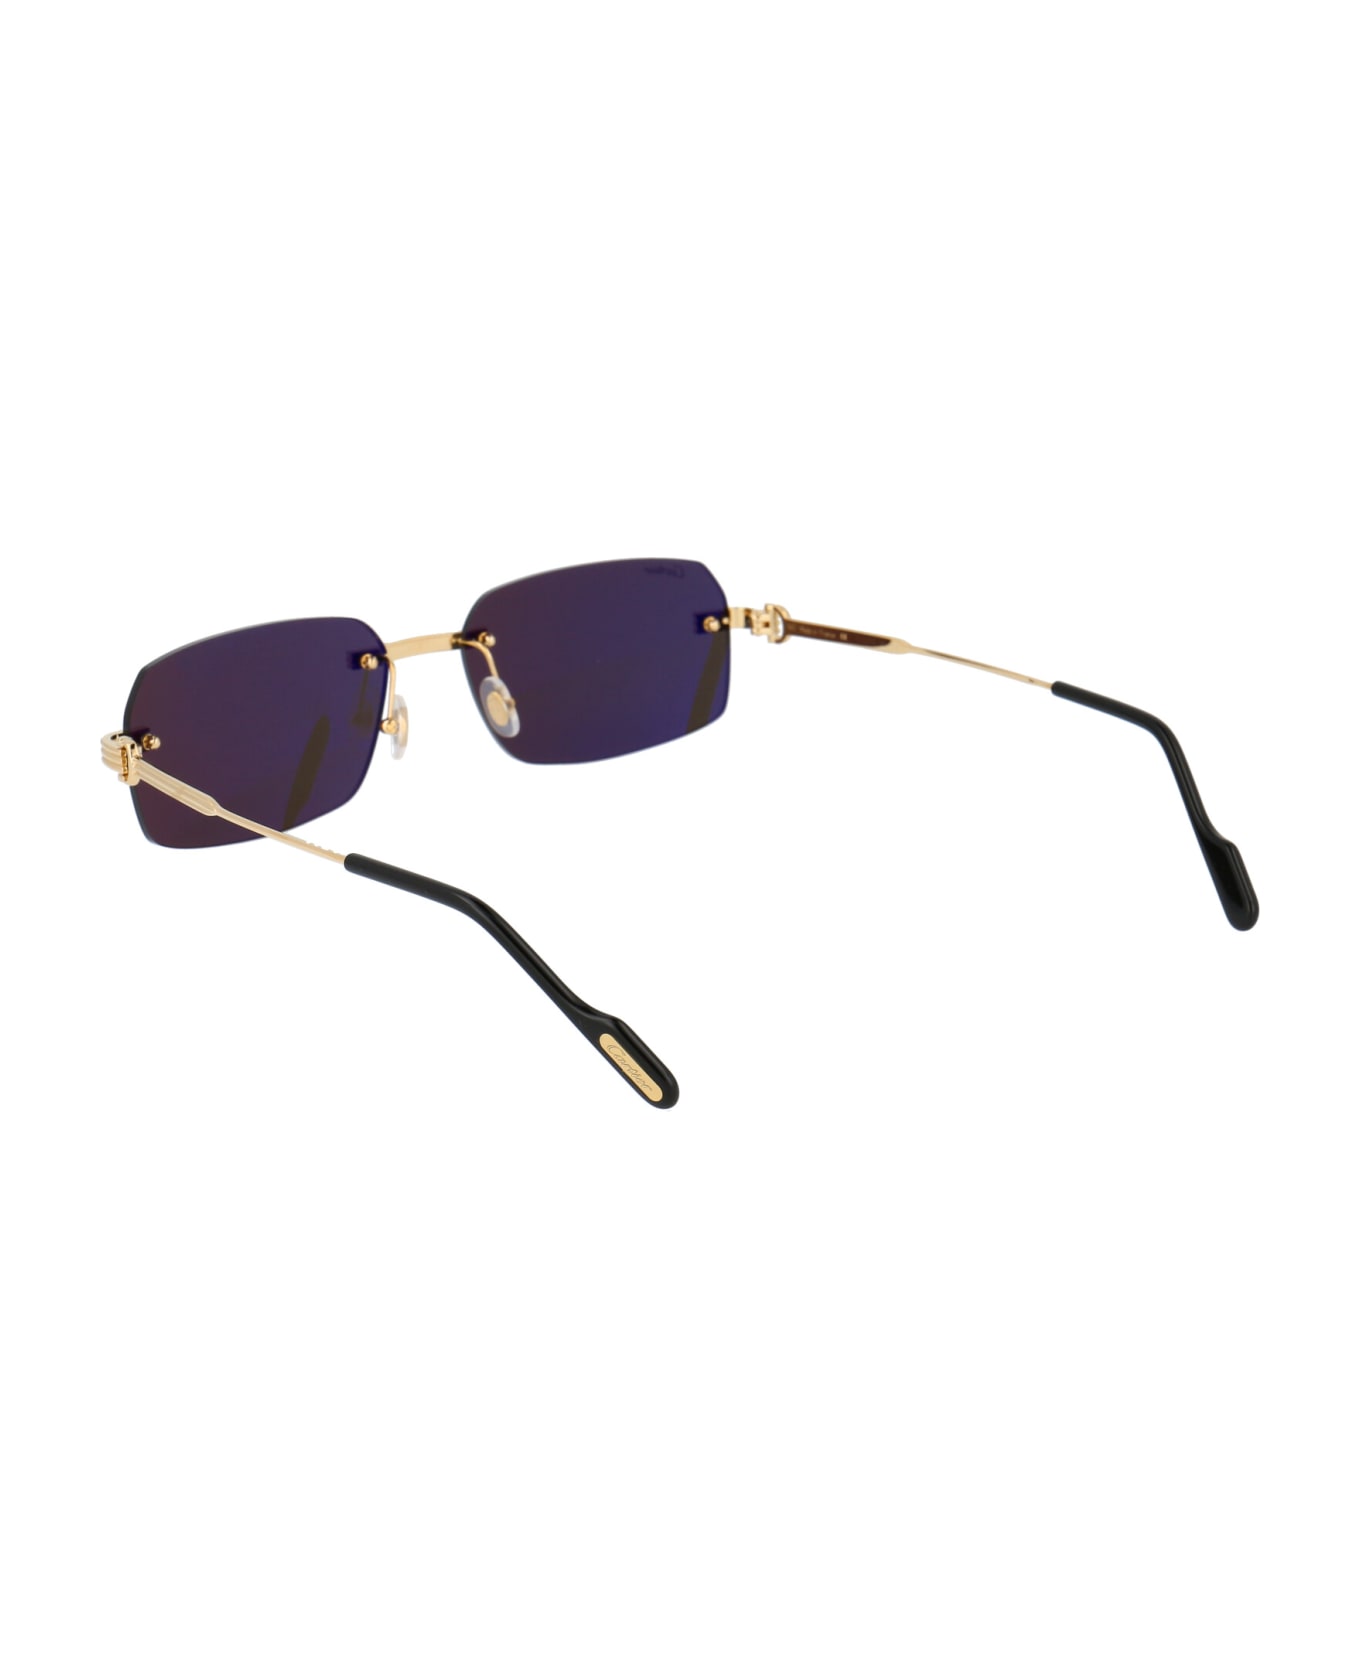 Cartier Eyewear Ct0271s Sunglasses - 001 GOLD GOLD GREY